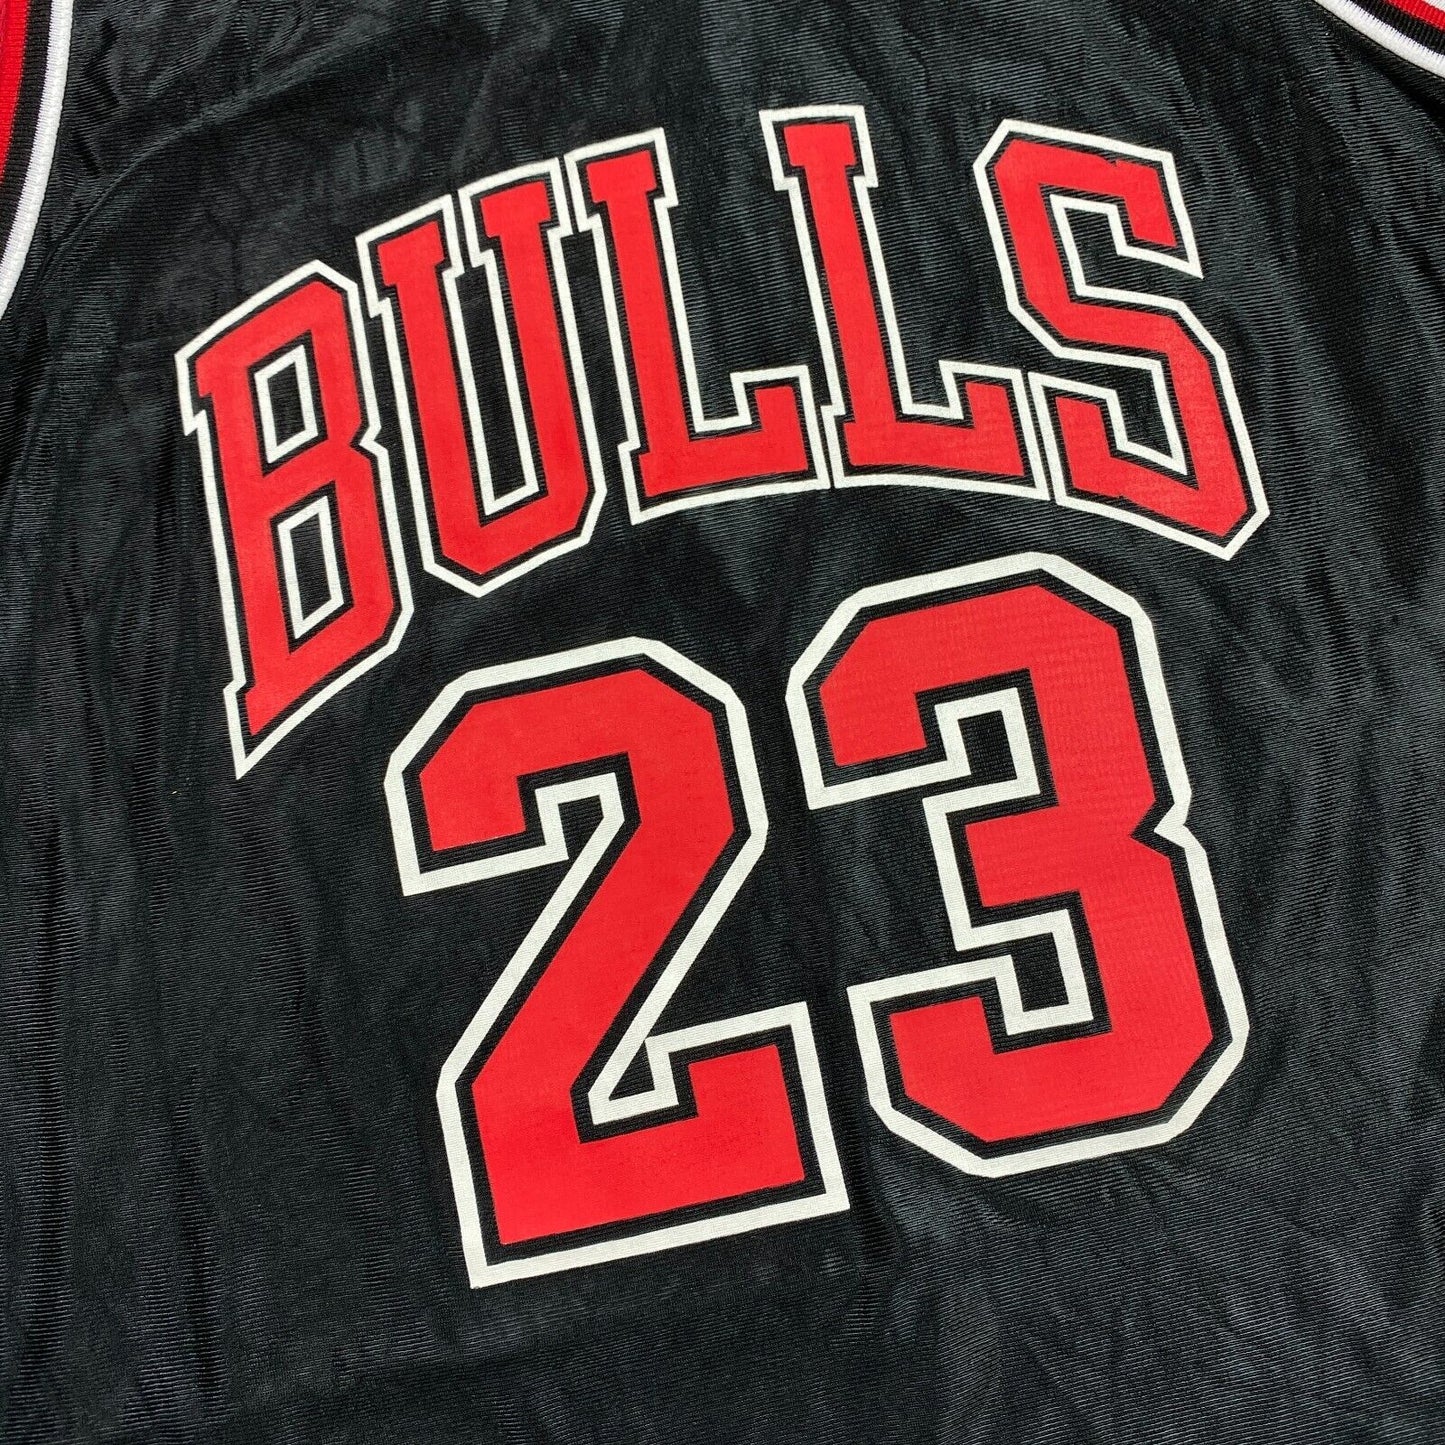 100% Authentic Michael Jordan Vintage Champion Bulls Reversible Jersey Size 44